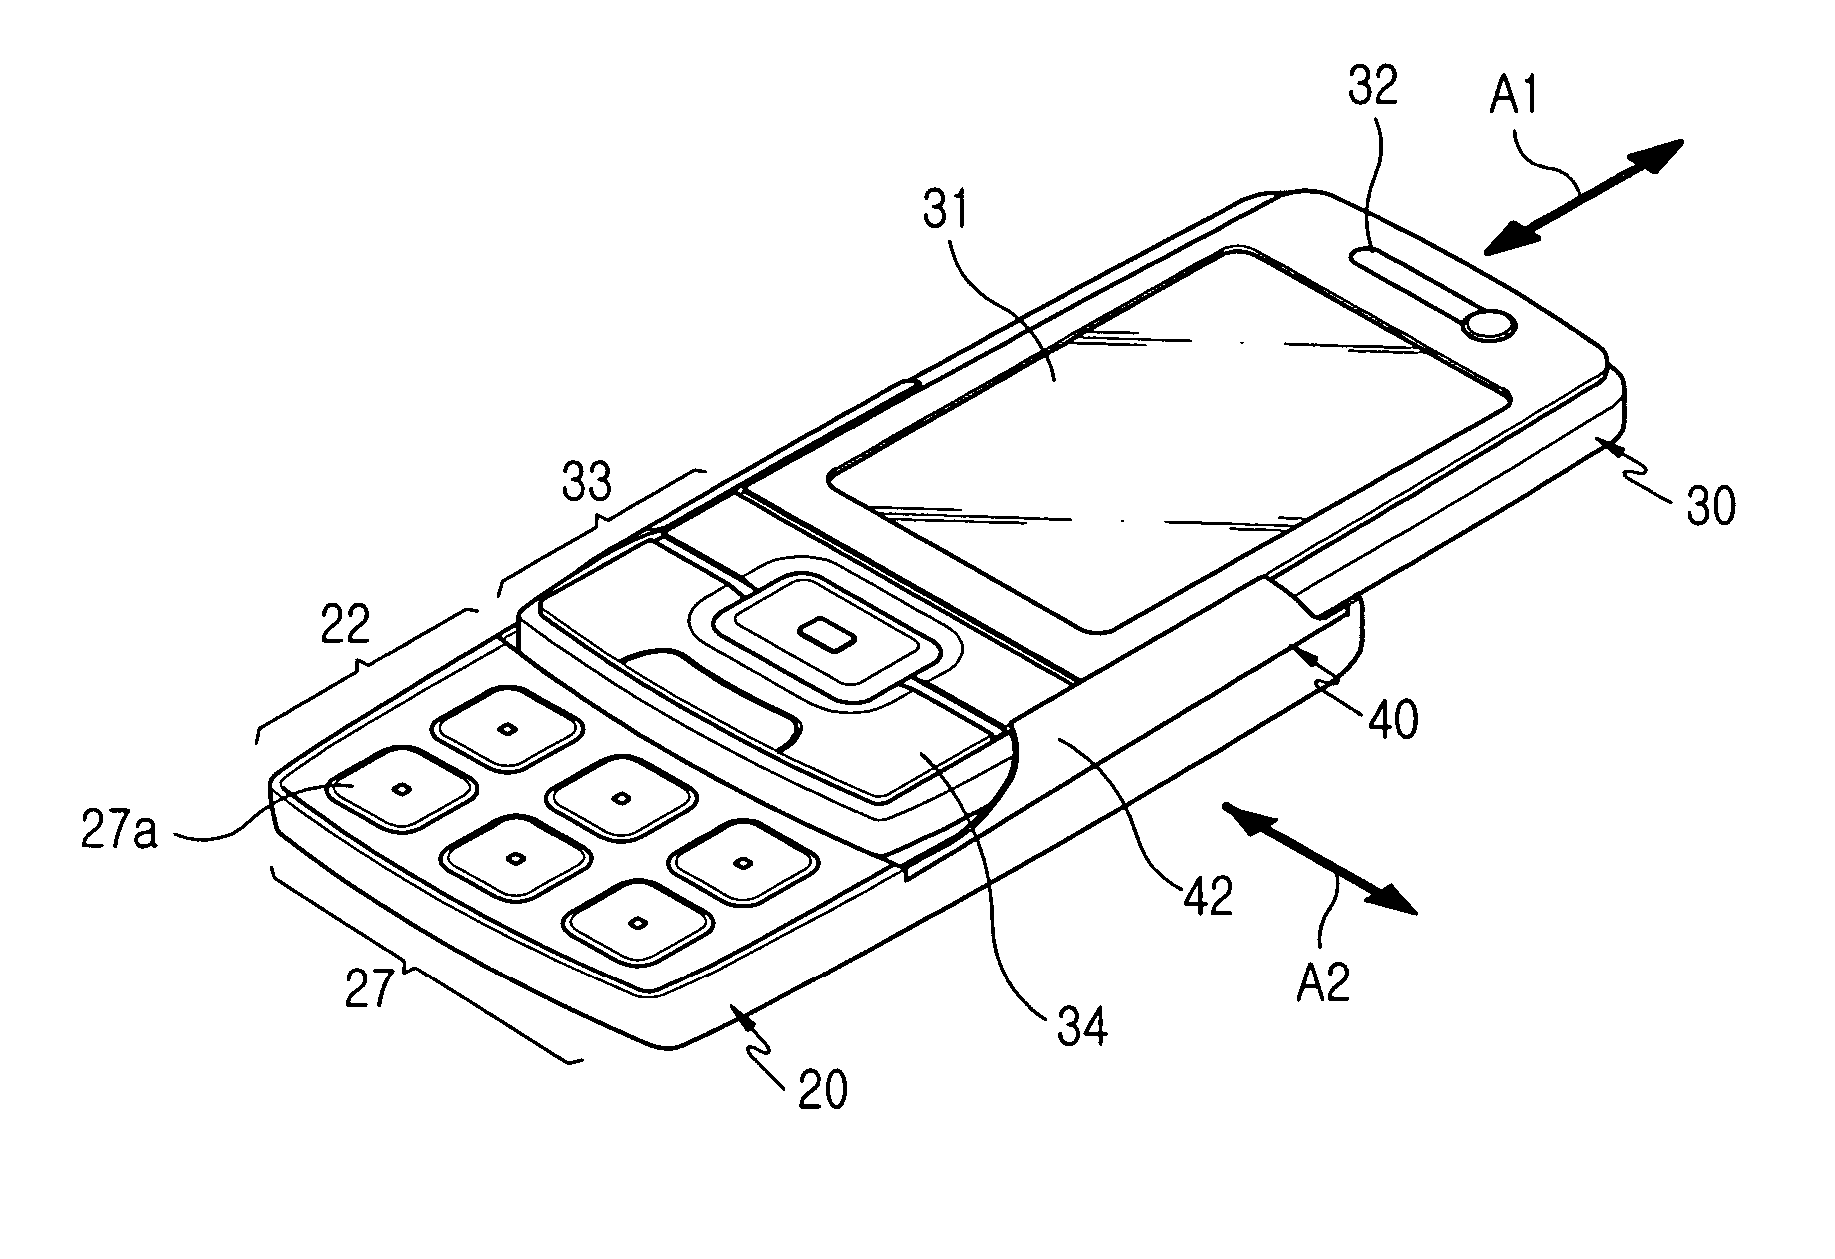 Double sliding-type portable communication apparatus